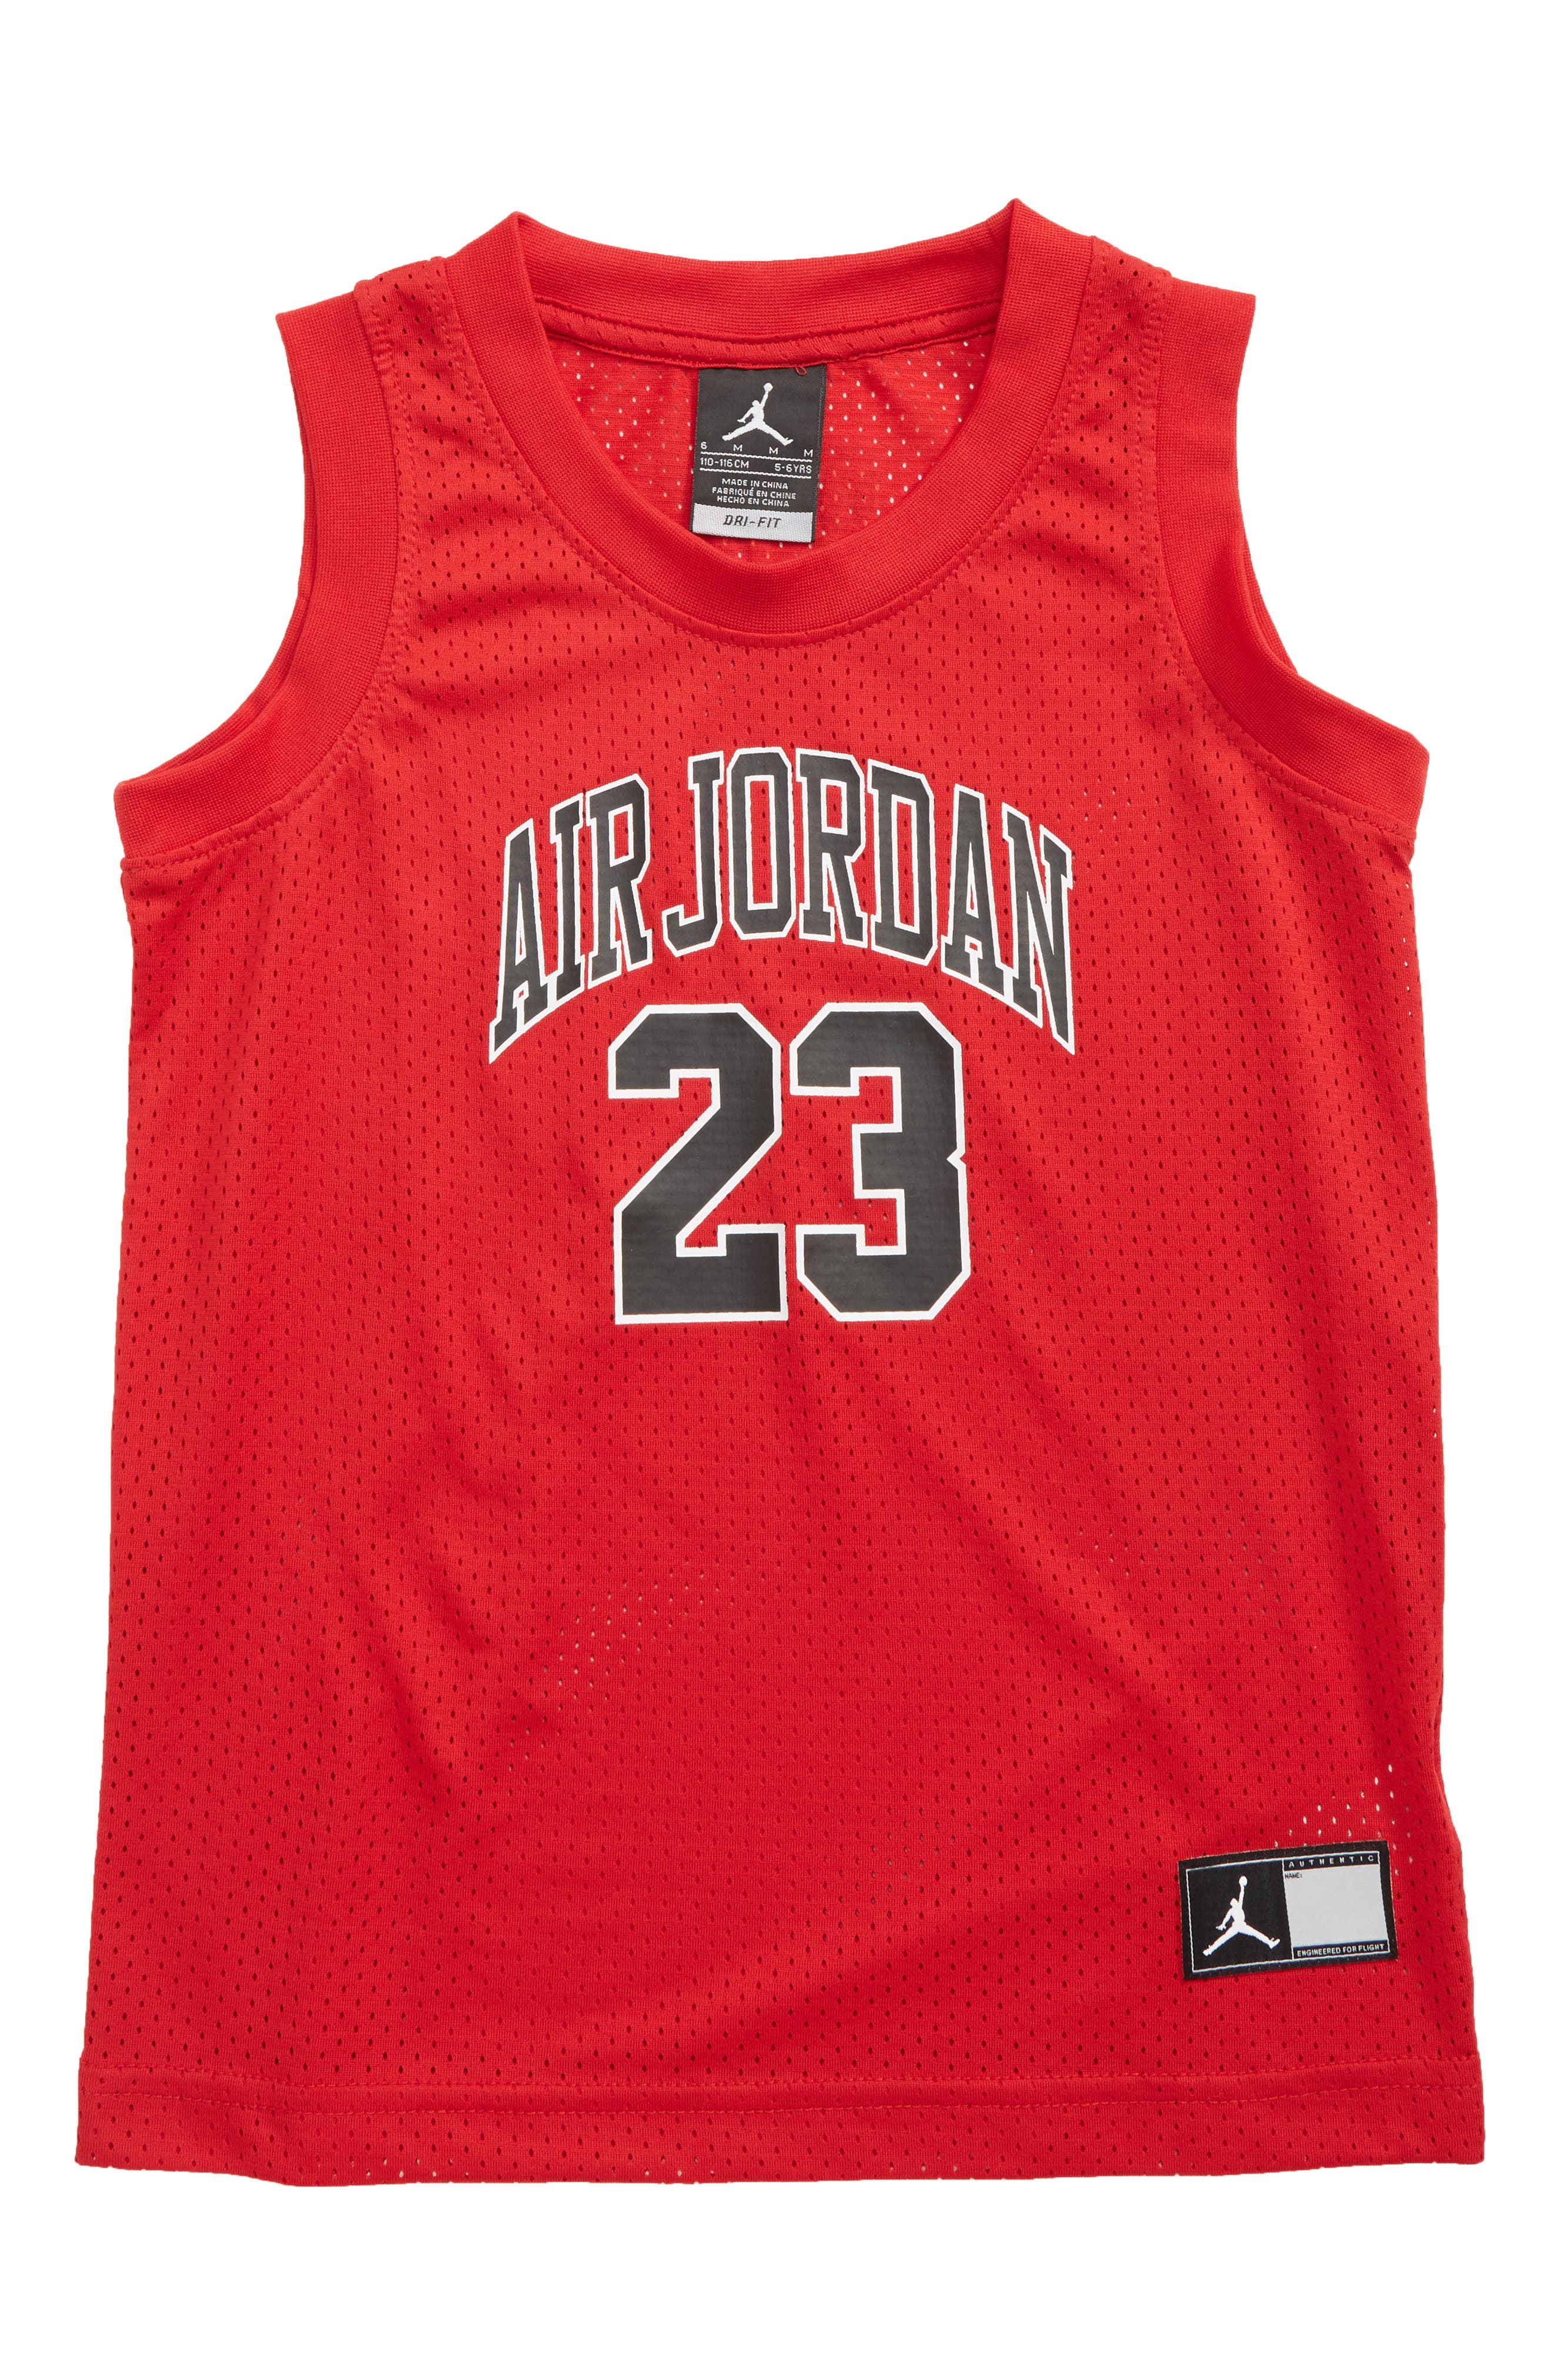 Jordan Air Jordan Jersey (Toddler Boys 